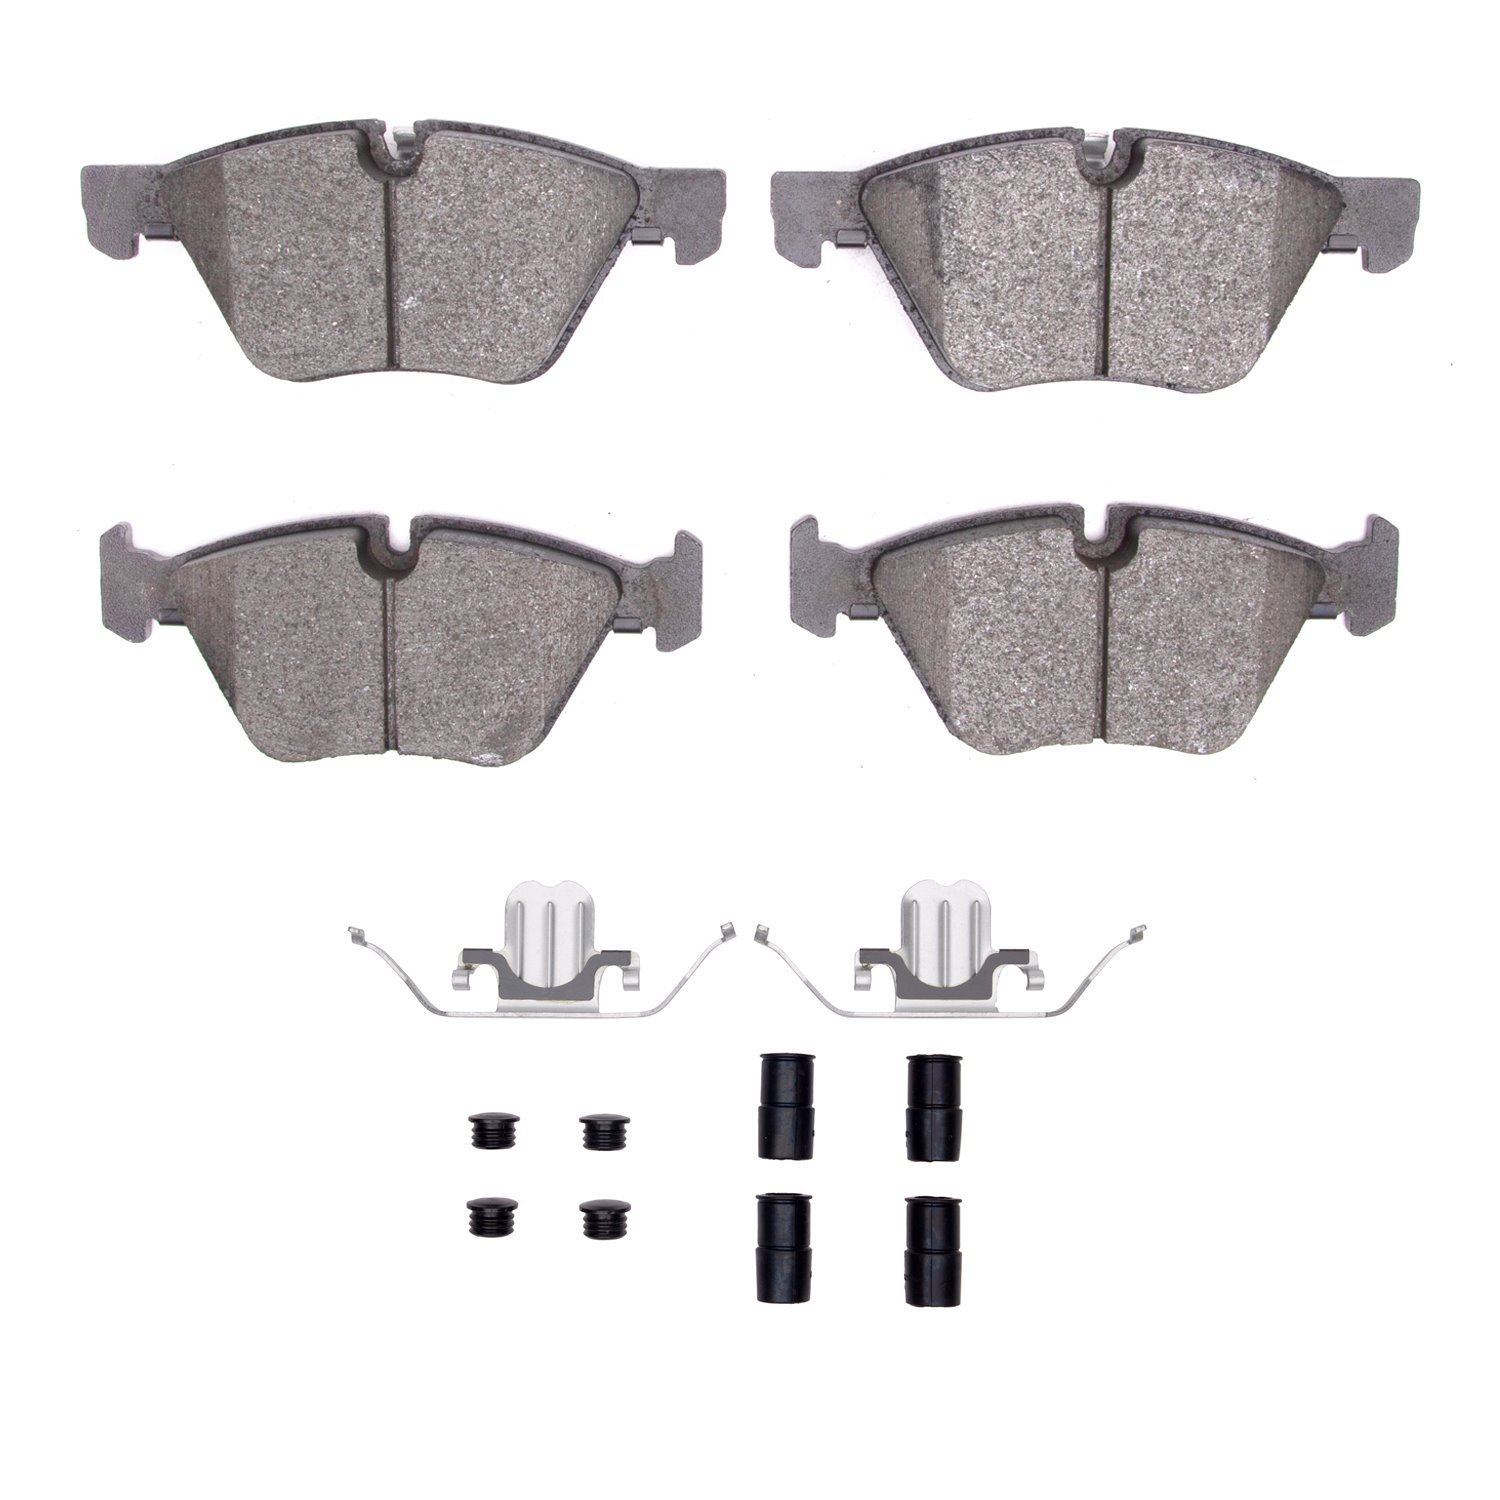 1551-1061-11 5000 Advanced Ceramic Brake Pads & Hardware Kit, 2012-2013 BMW, Position: Front